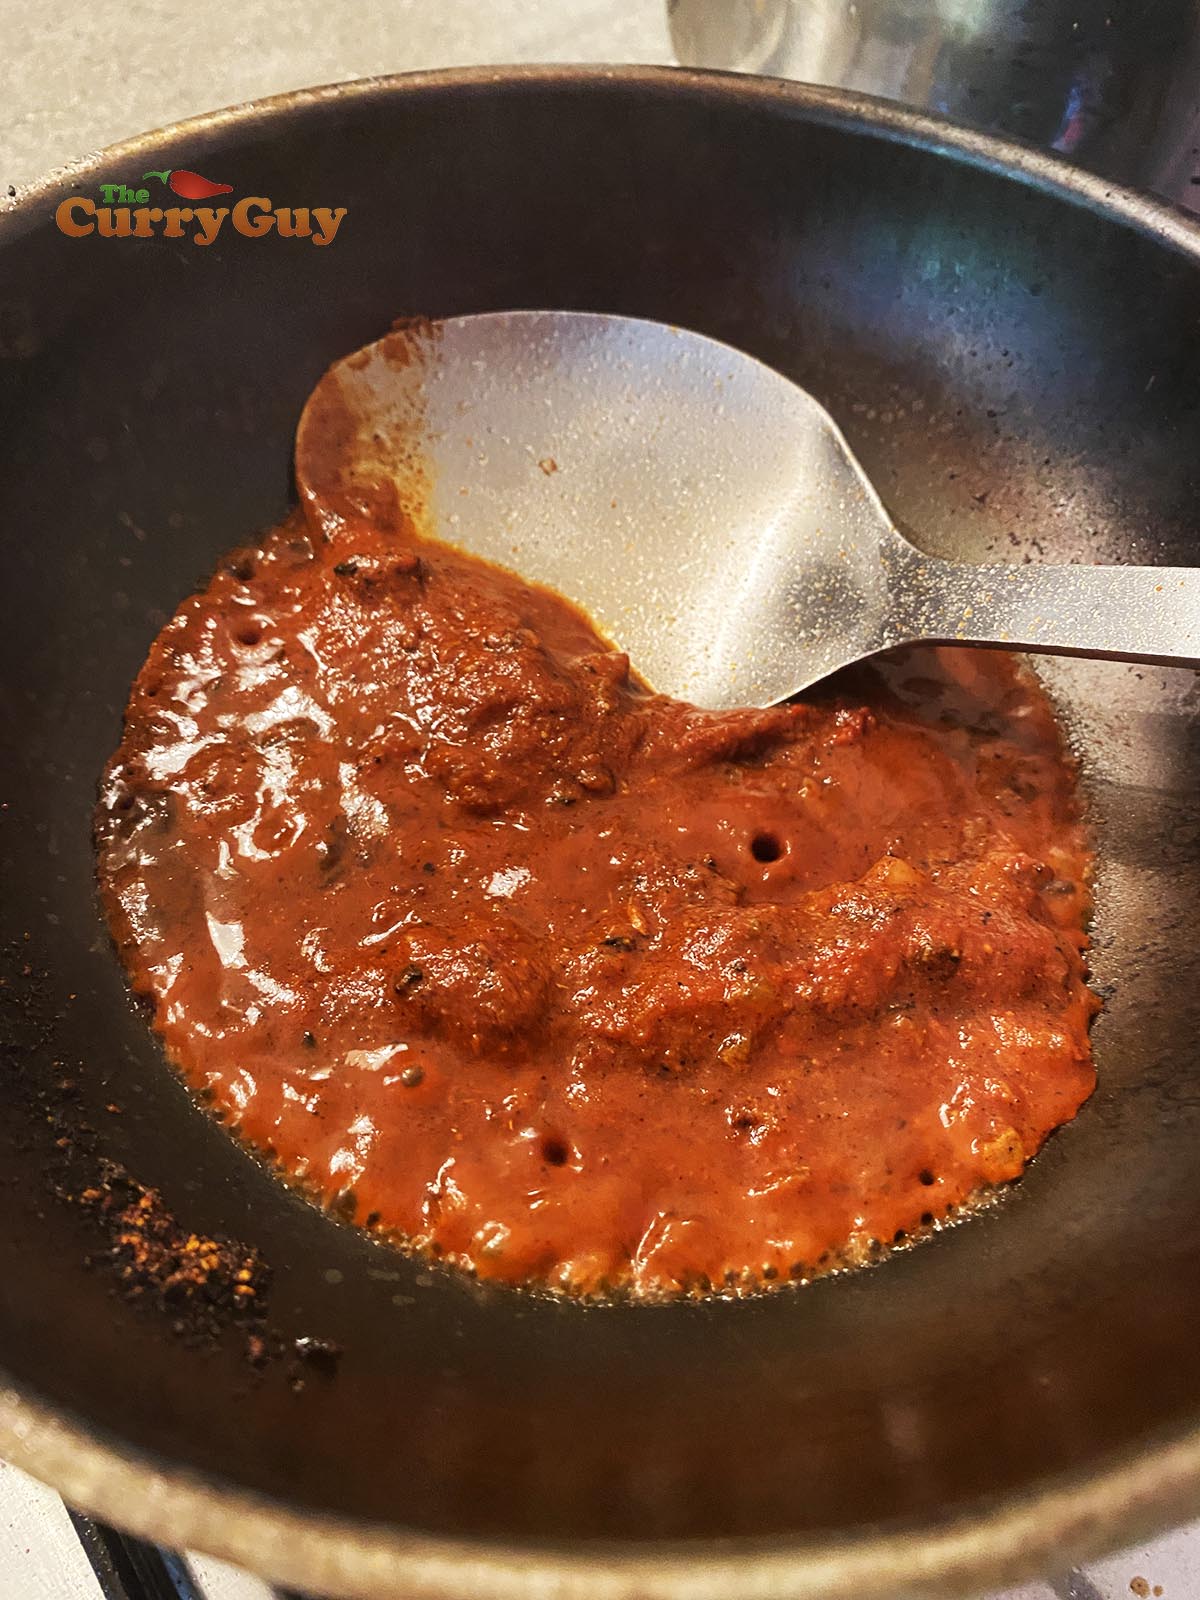 Adding tomato puree.